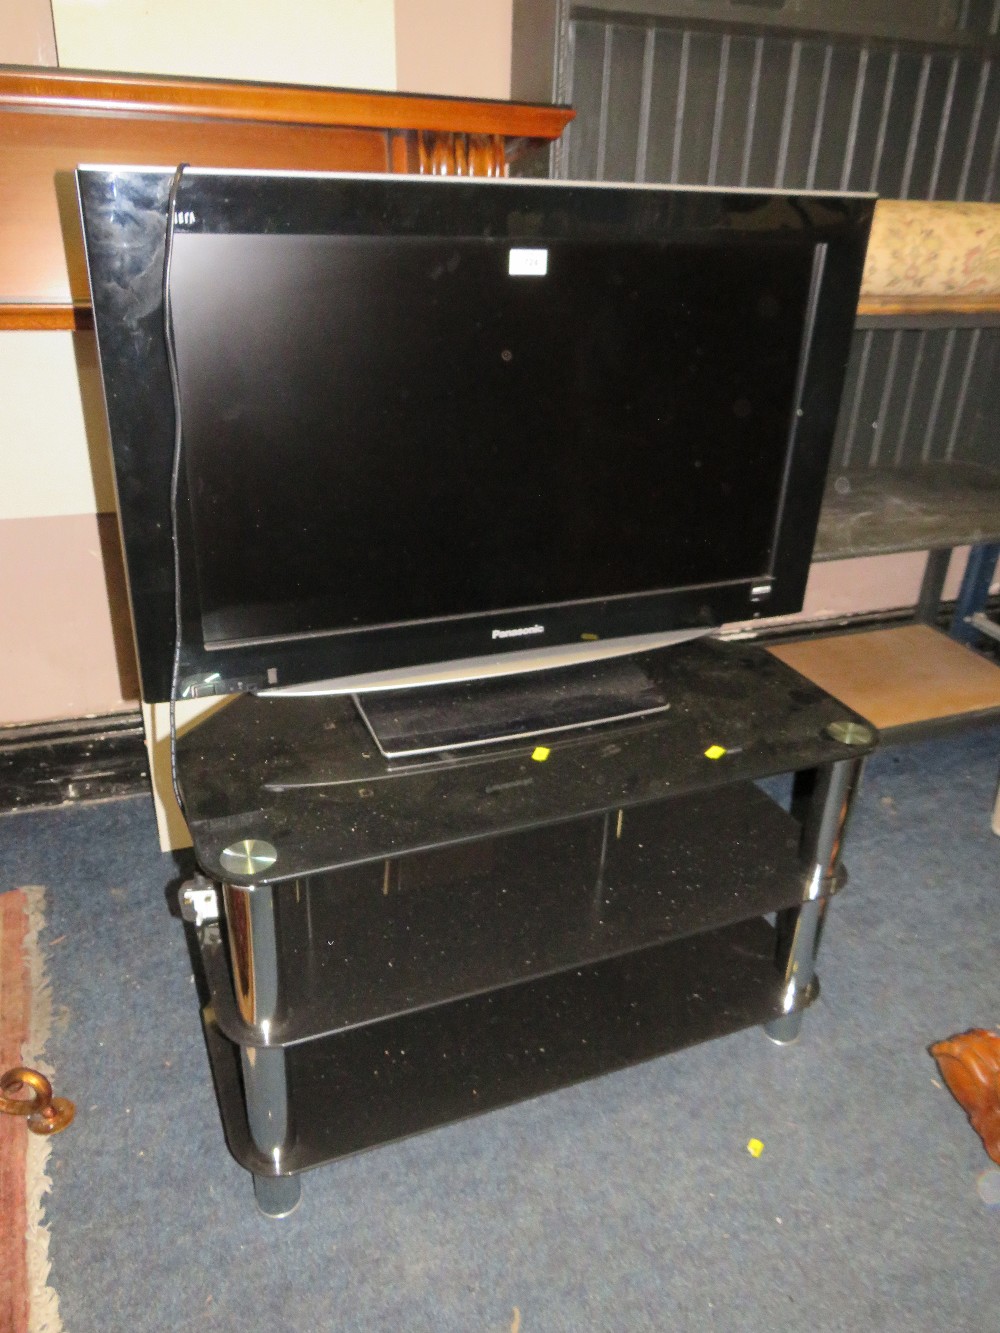 A PANASONIC FLATSCREEN 31" TV AND STAND - HOUSE CLEARANCE